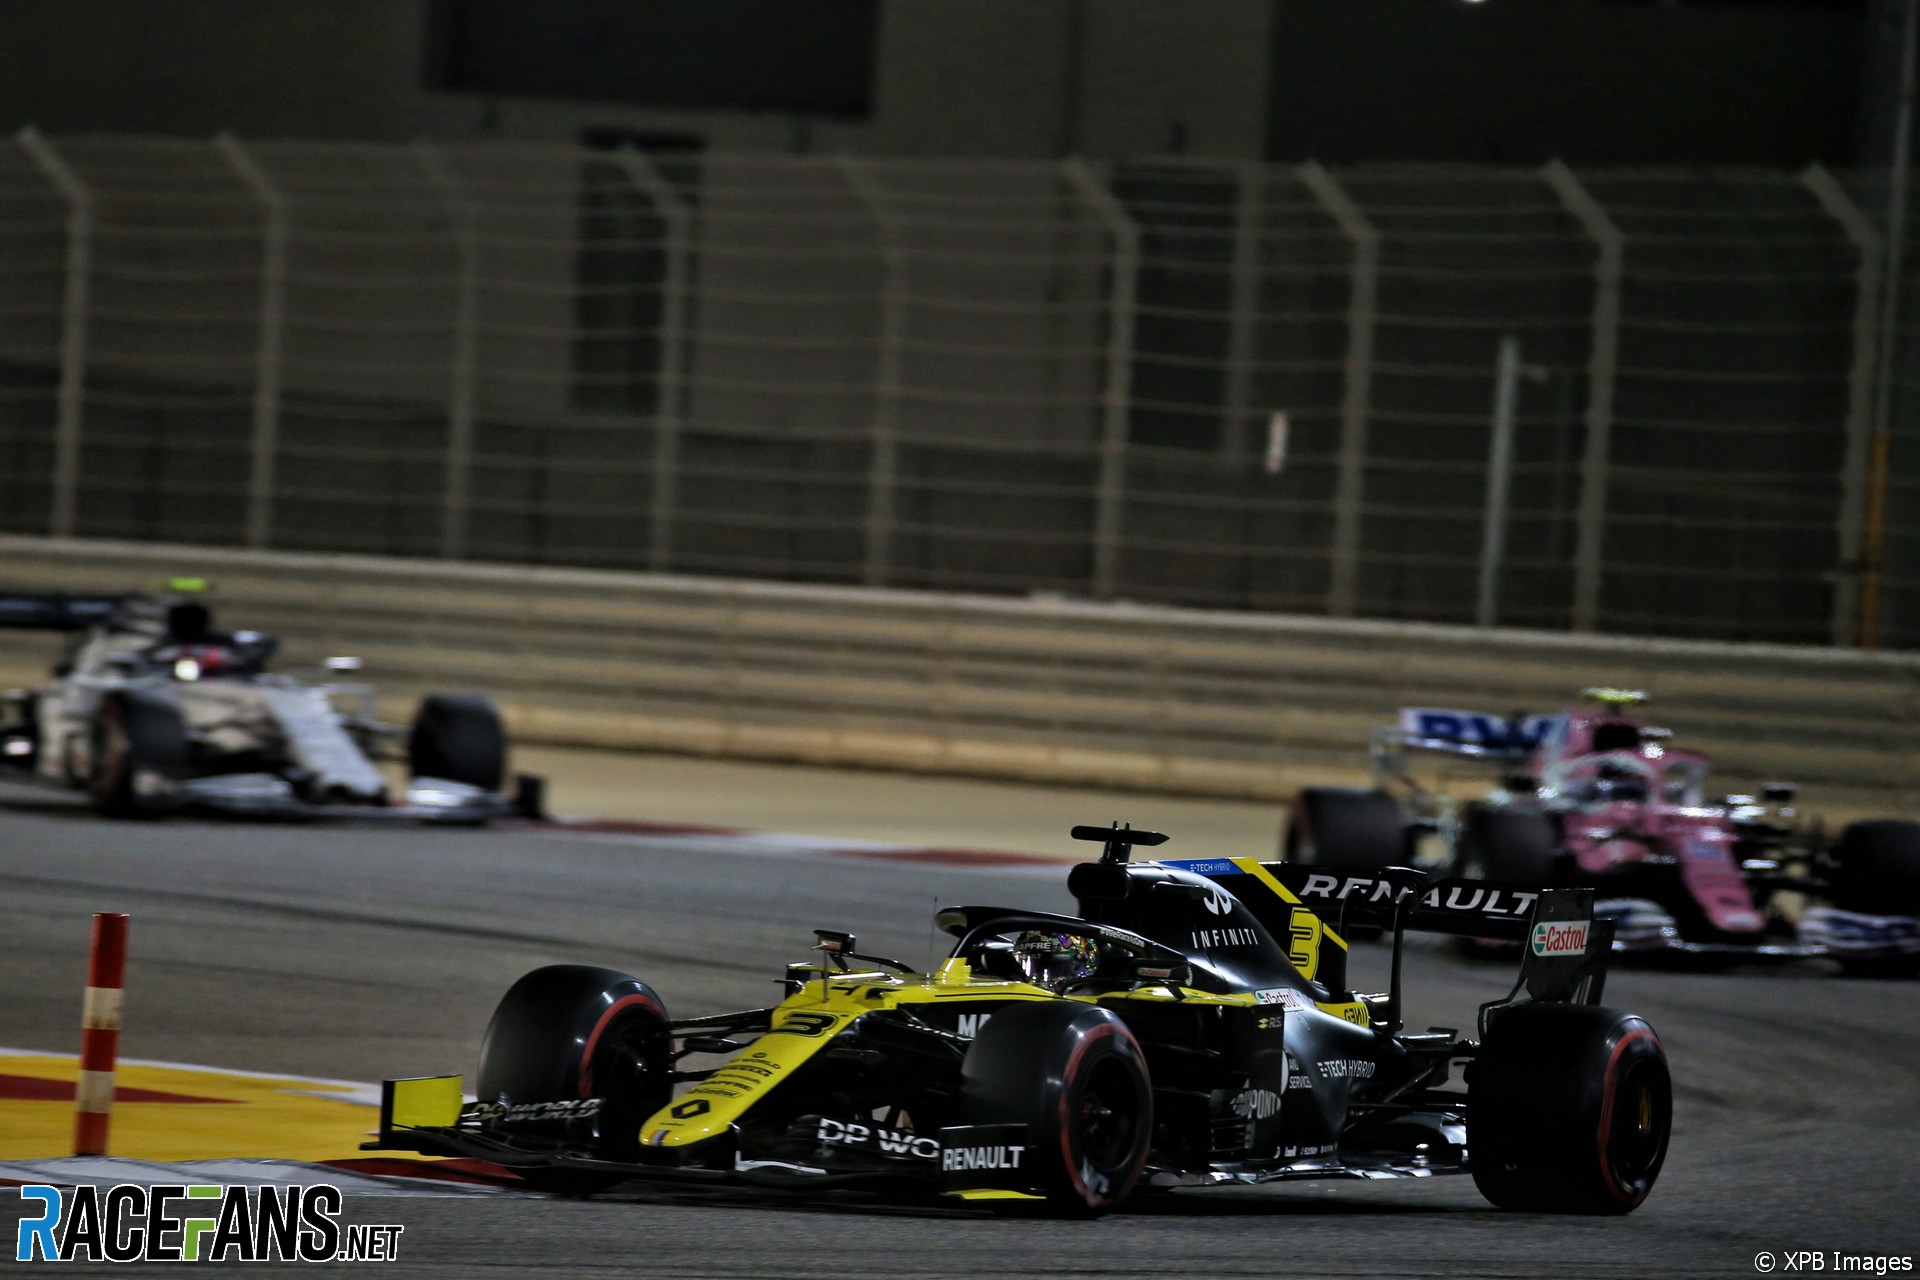 Daniel Ricciardo, Renault, Bahrain International Circuit, 2020